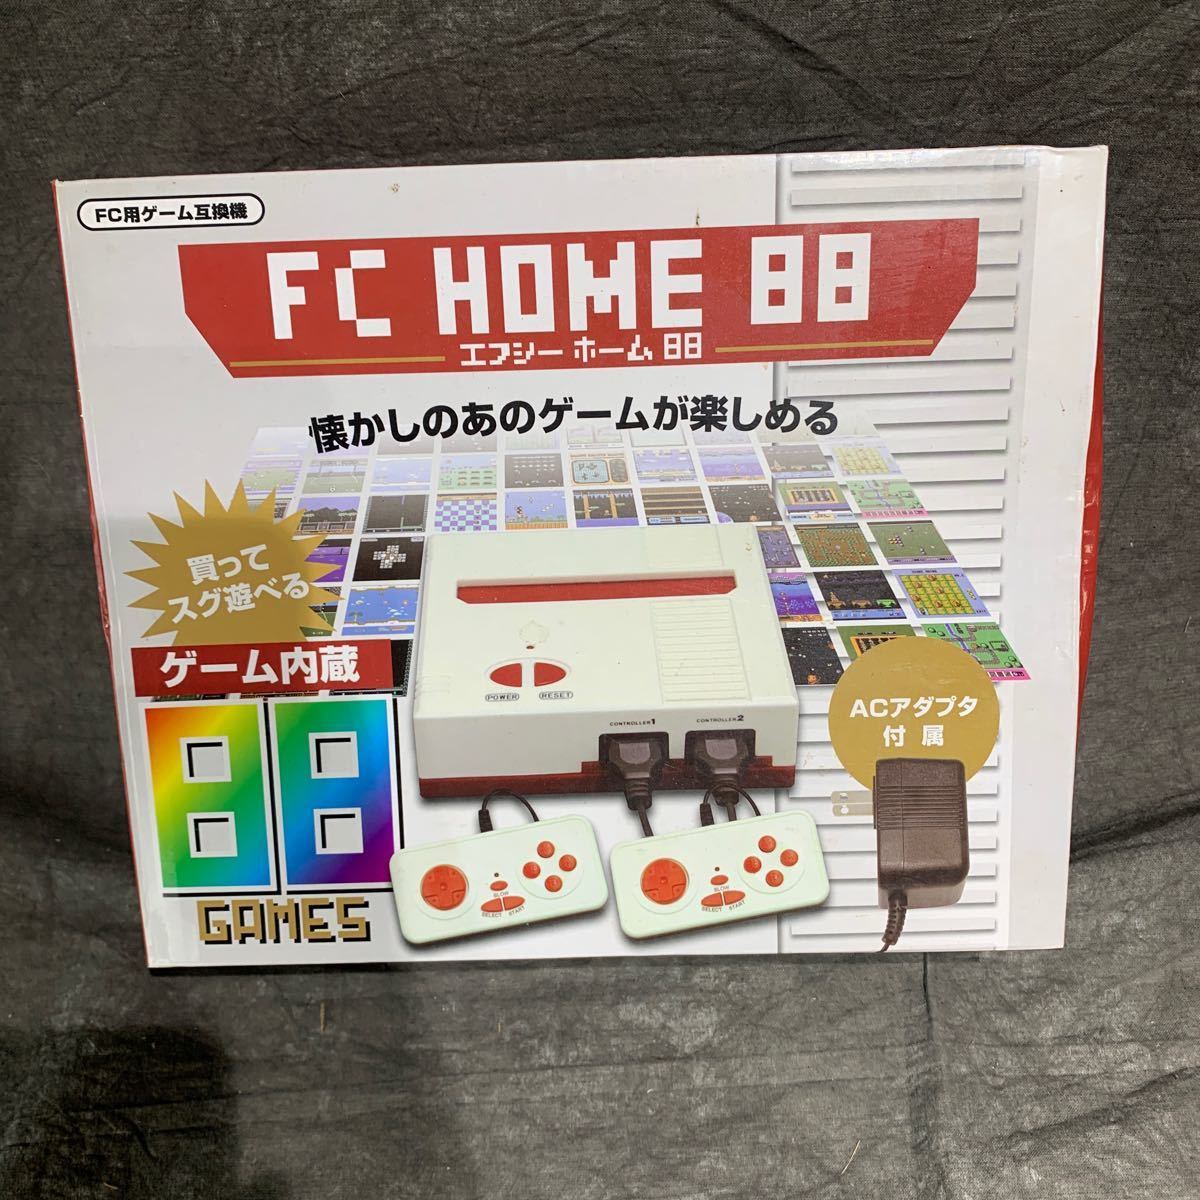  operation goods FC HOME 88efsi- Home 88 FC for game compatible Family computer Famicom game machine retro game nostalgia. game 